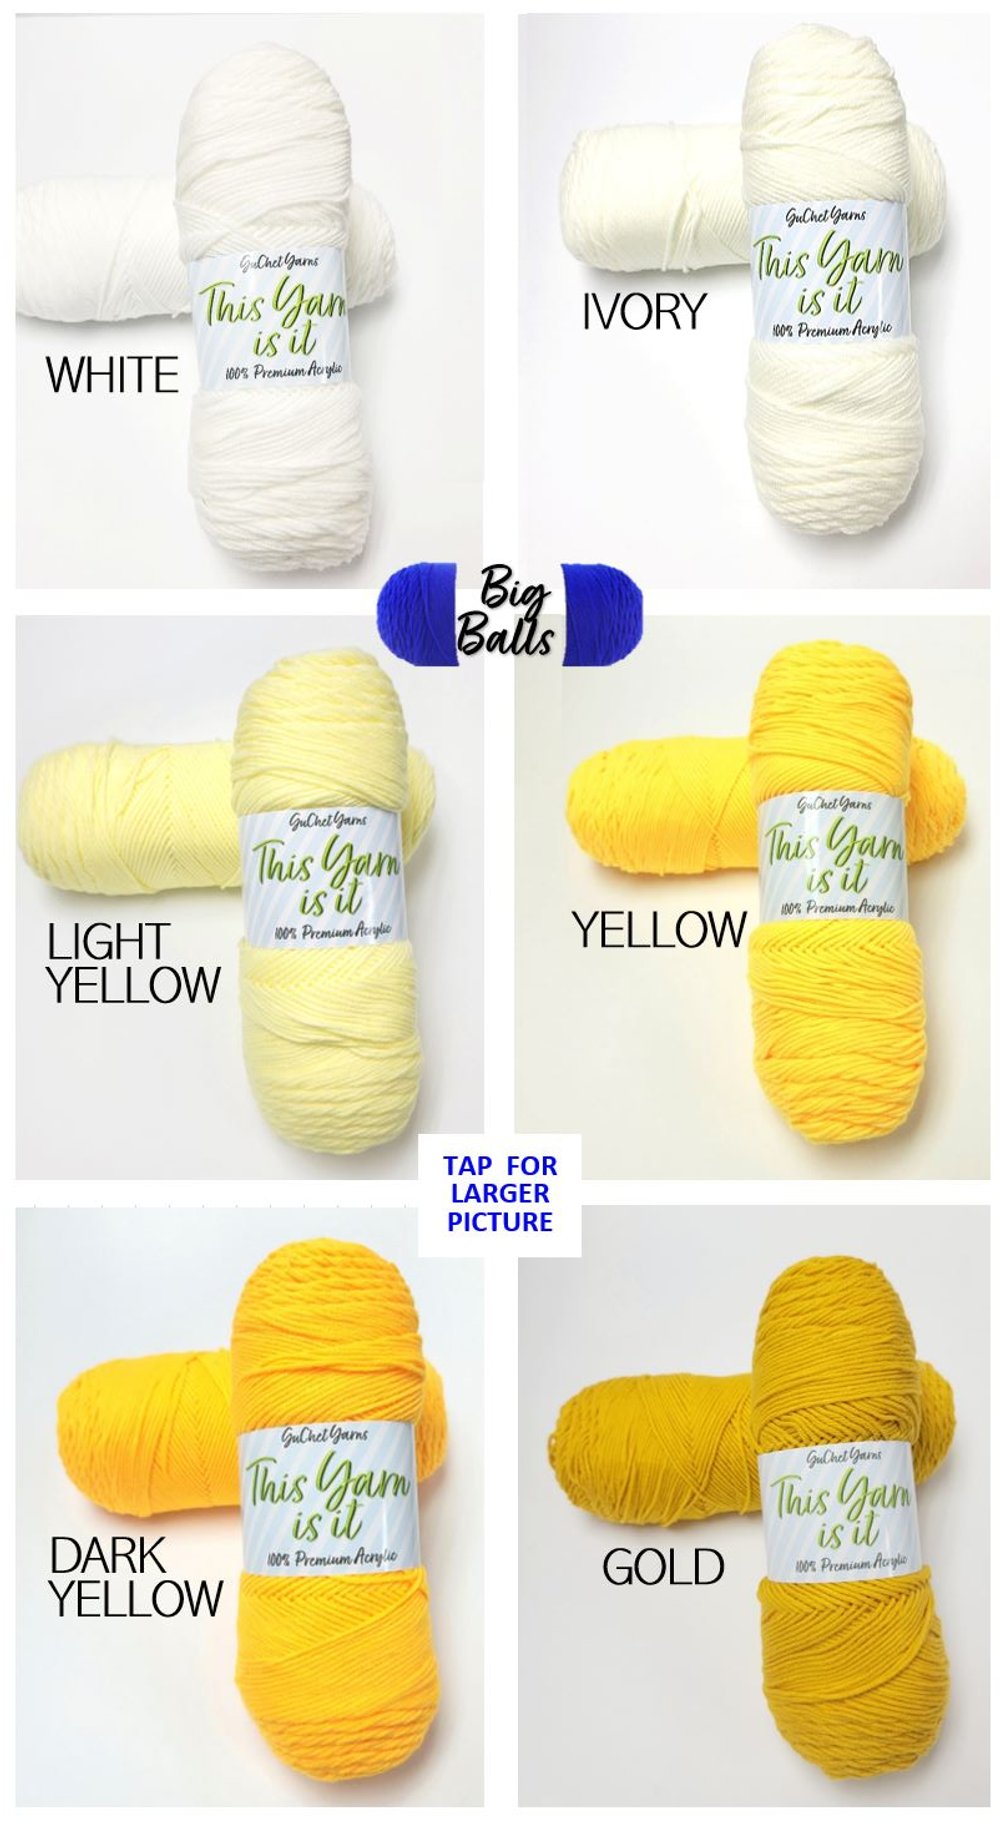 Glitter Acrylic Yarn for Hand Knitting 100g/Skein Eyelash Thread Metallic  Yarn for Crochet Blankets Sweaters